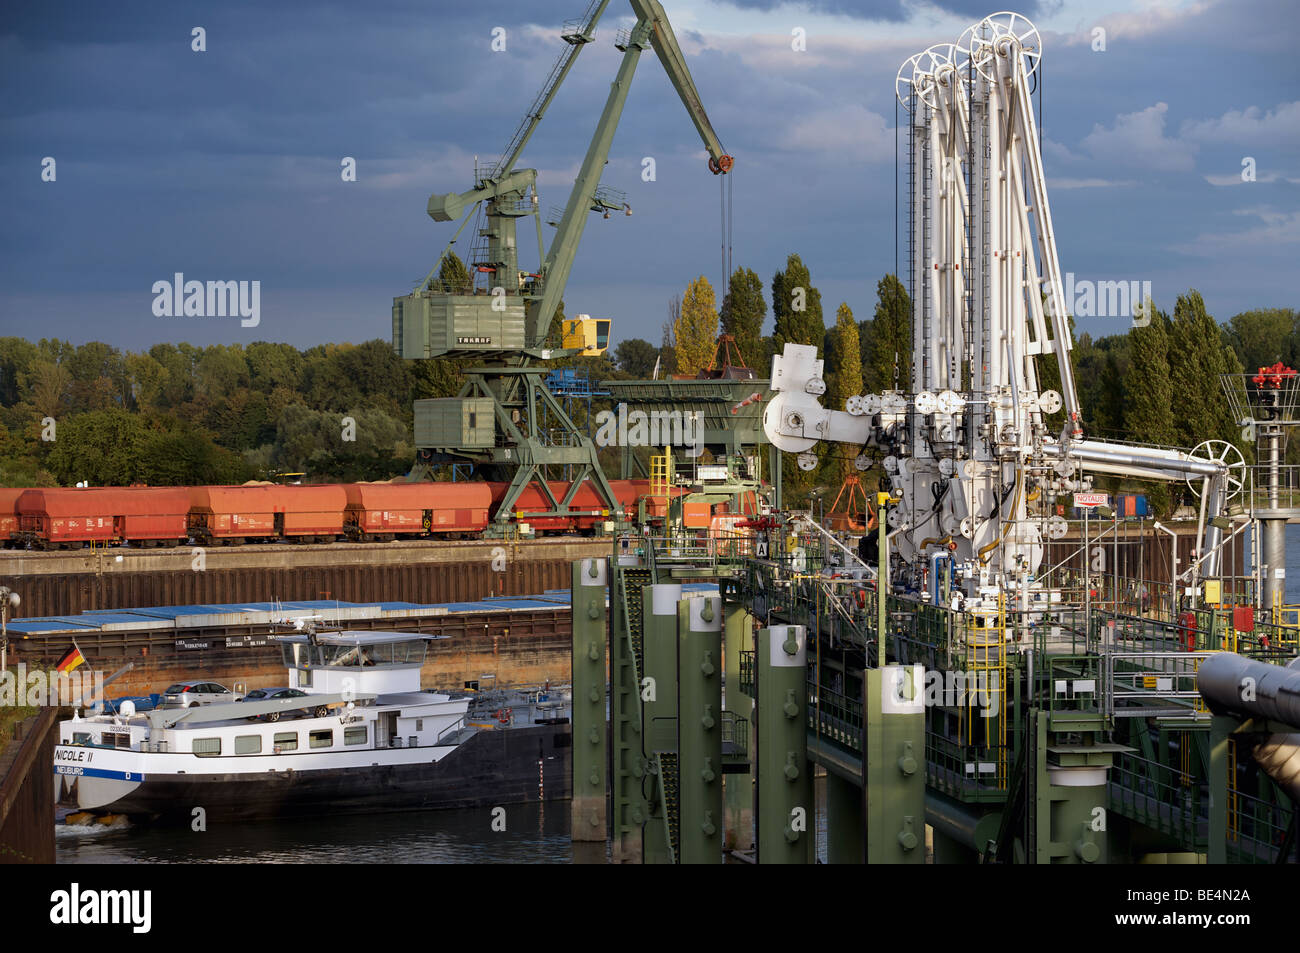 Royal Dutch Shell Öl-terminal, Deutschland. Stockfoto